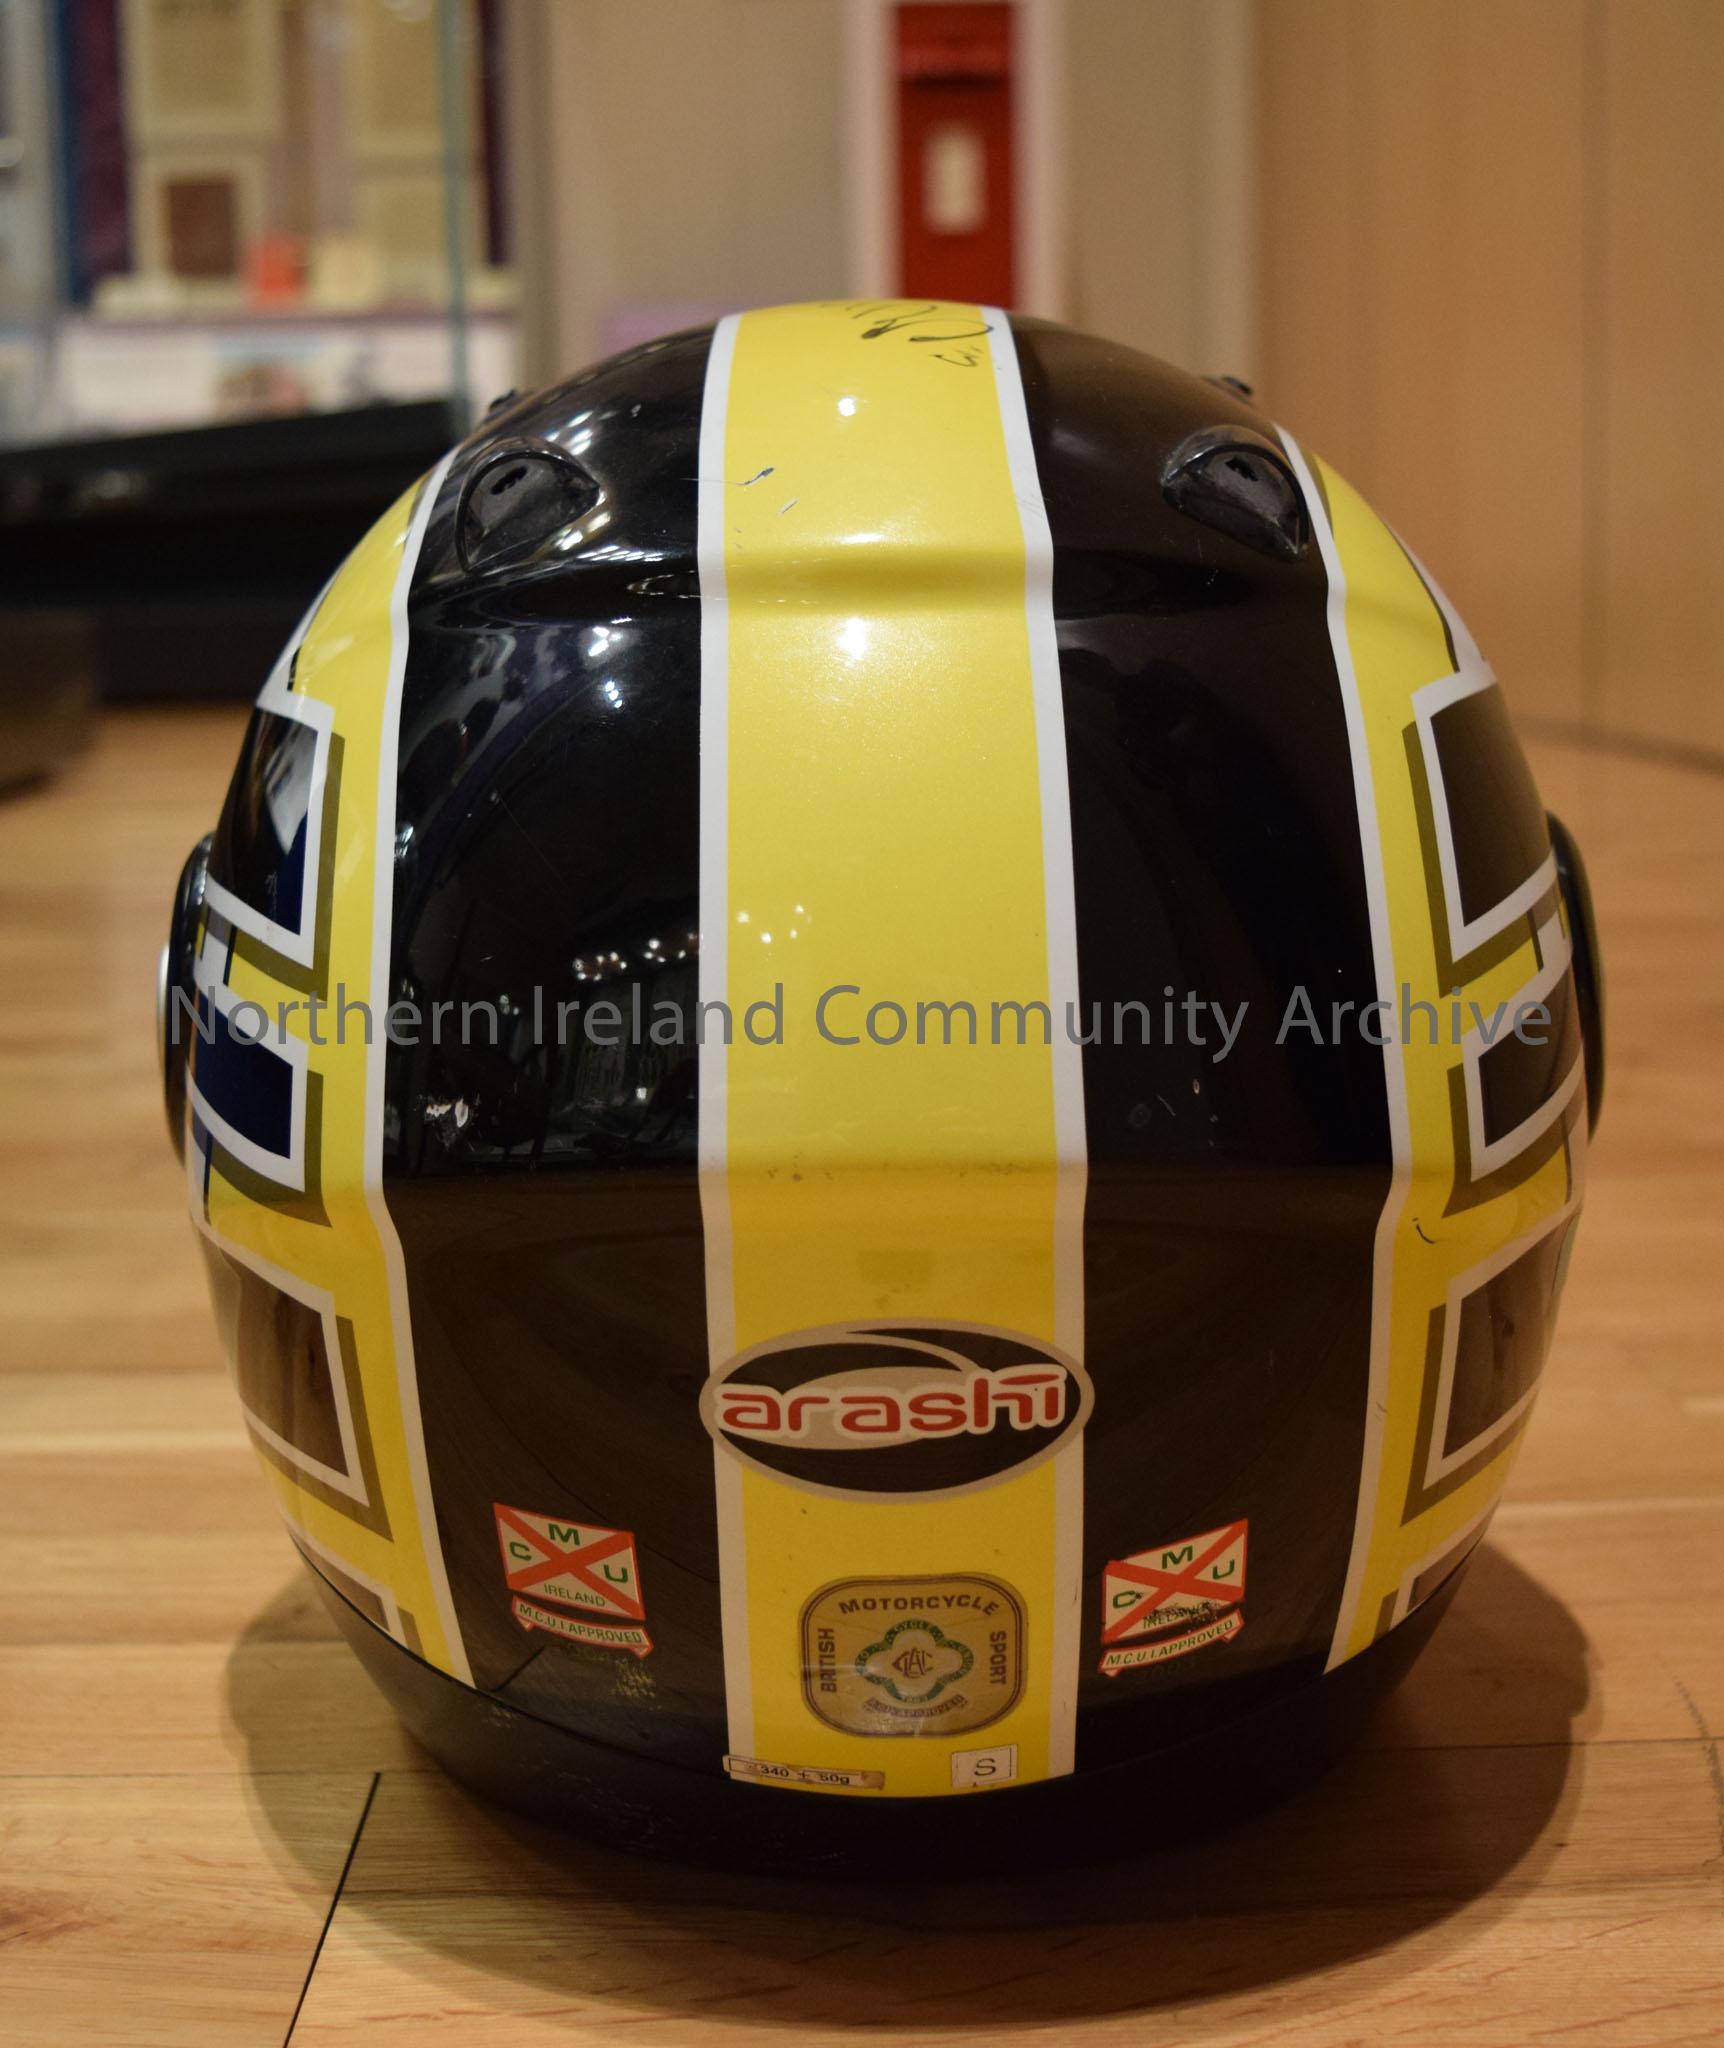 Arashi motorcycle helmet belonging to Michael Dunlop. Black, yellow and white striped helmet. – 2016.110 (4)